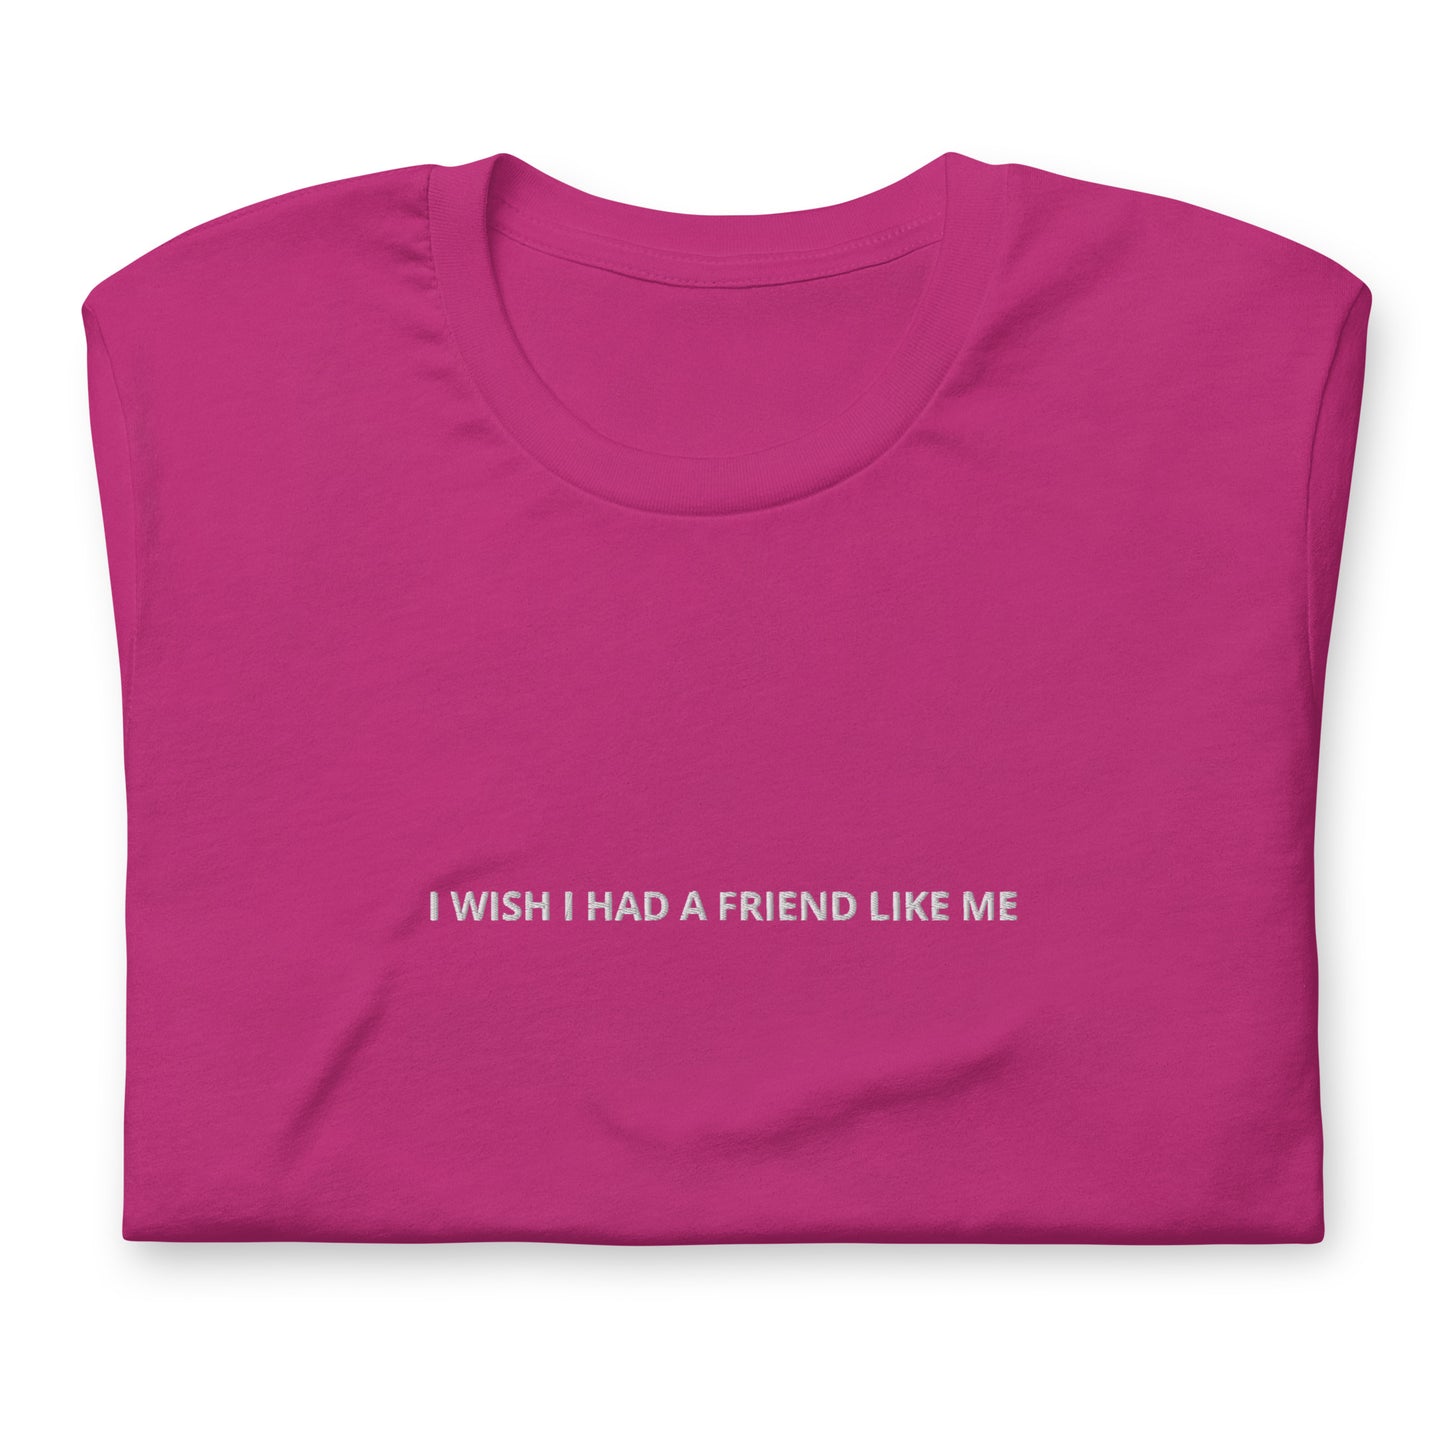 I WISH I HAD A FRIEND LIKE ME - besticktes T-Shirt